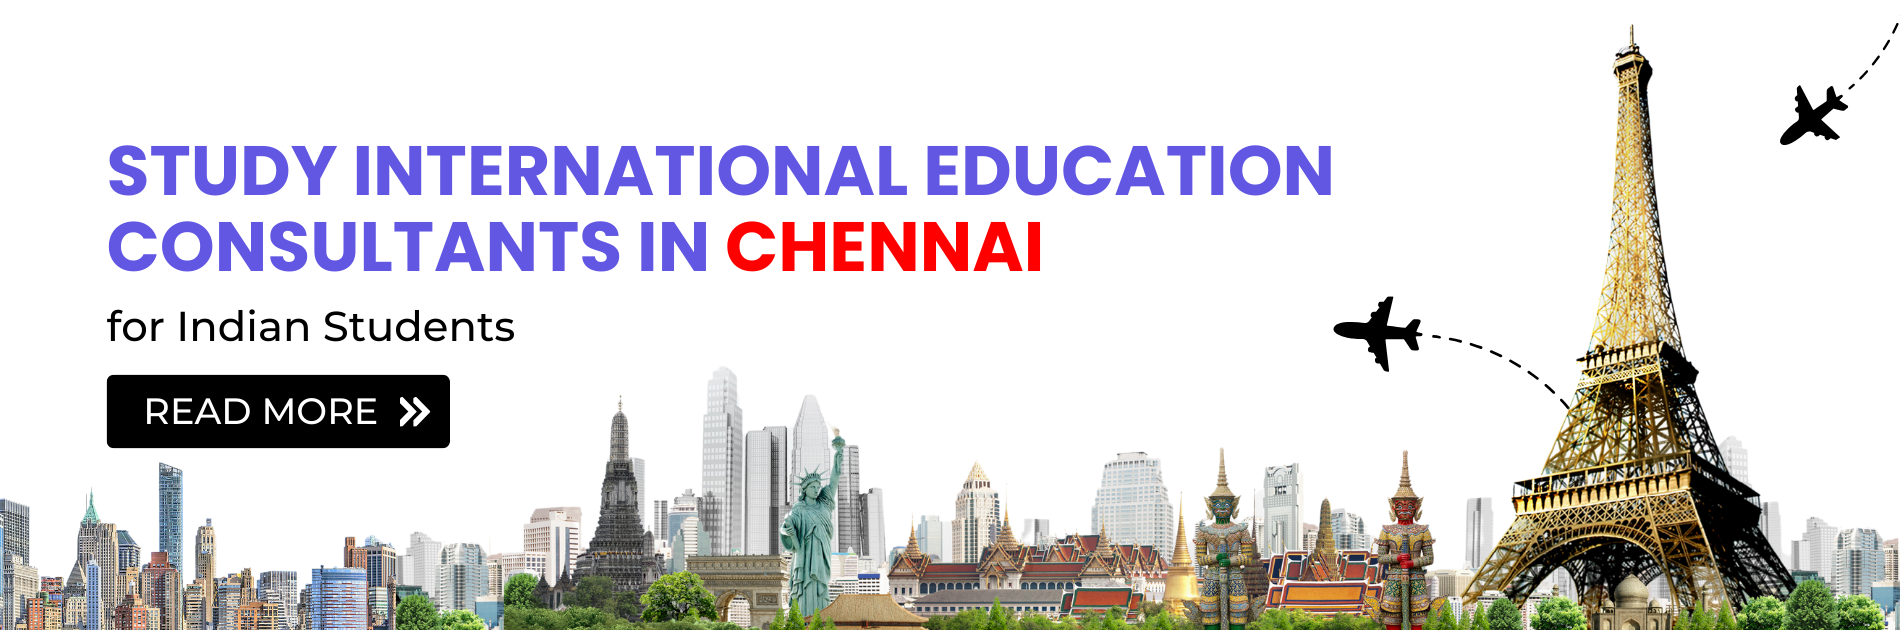 Study International Education Consultants in Chennai